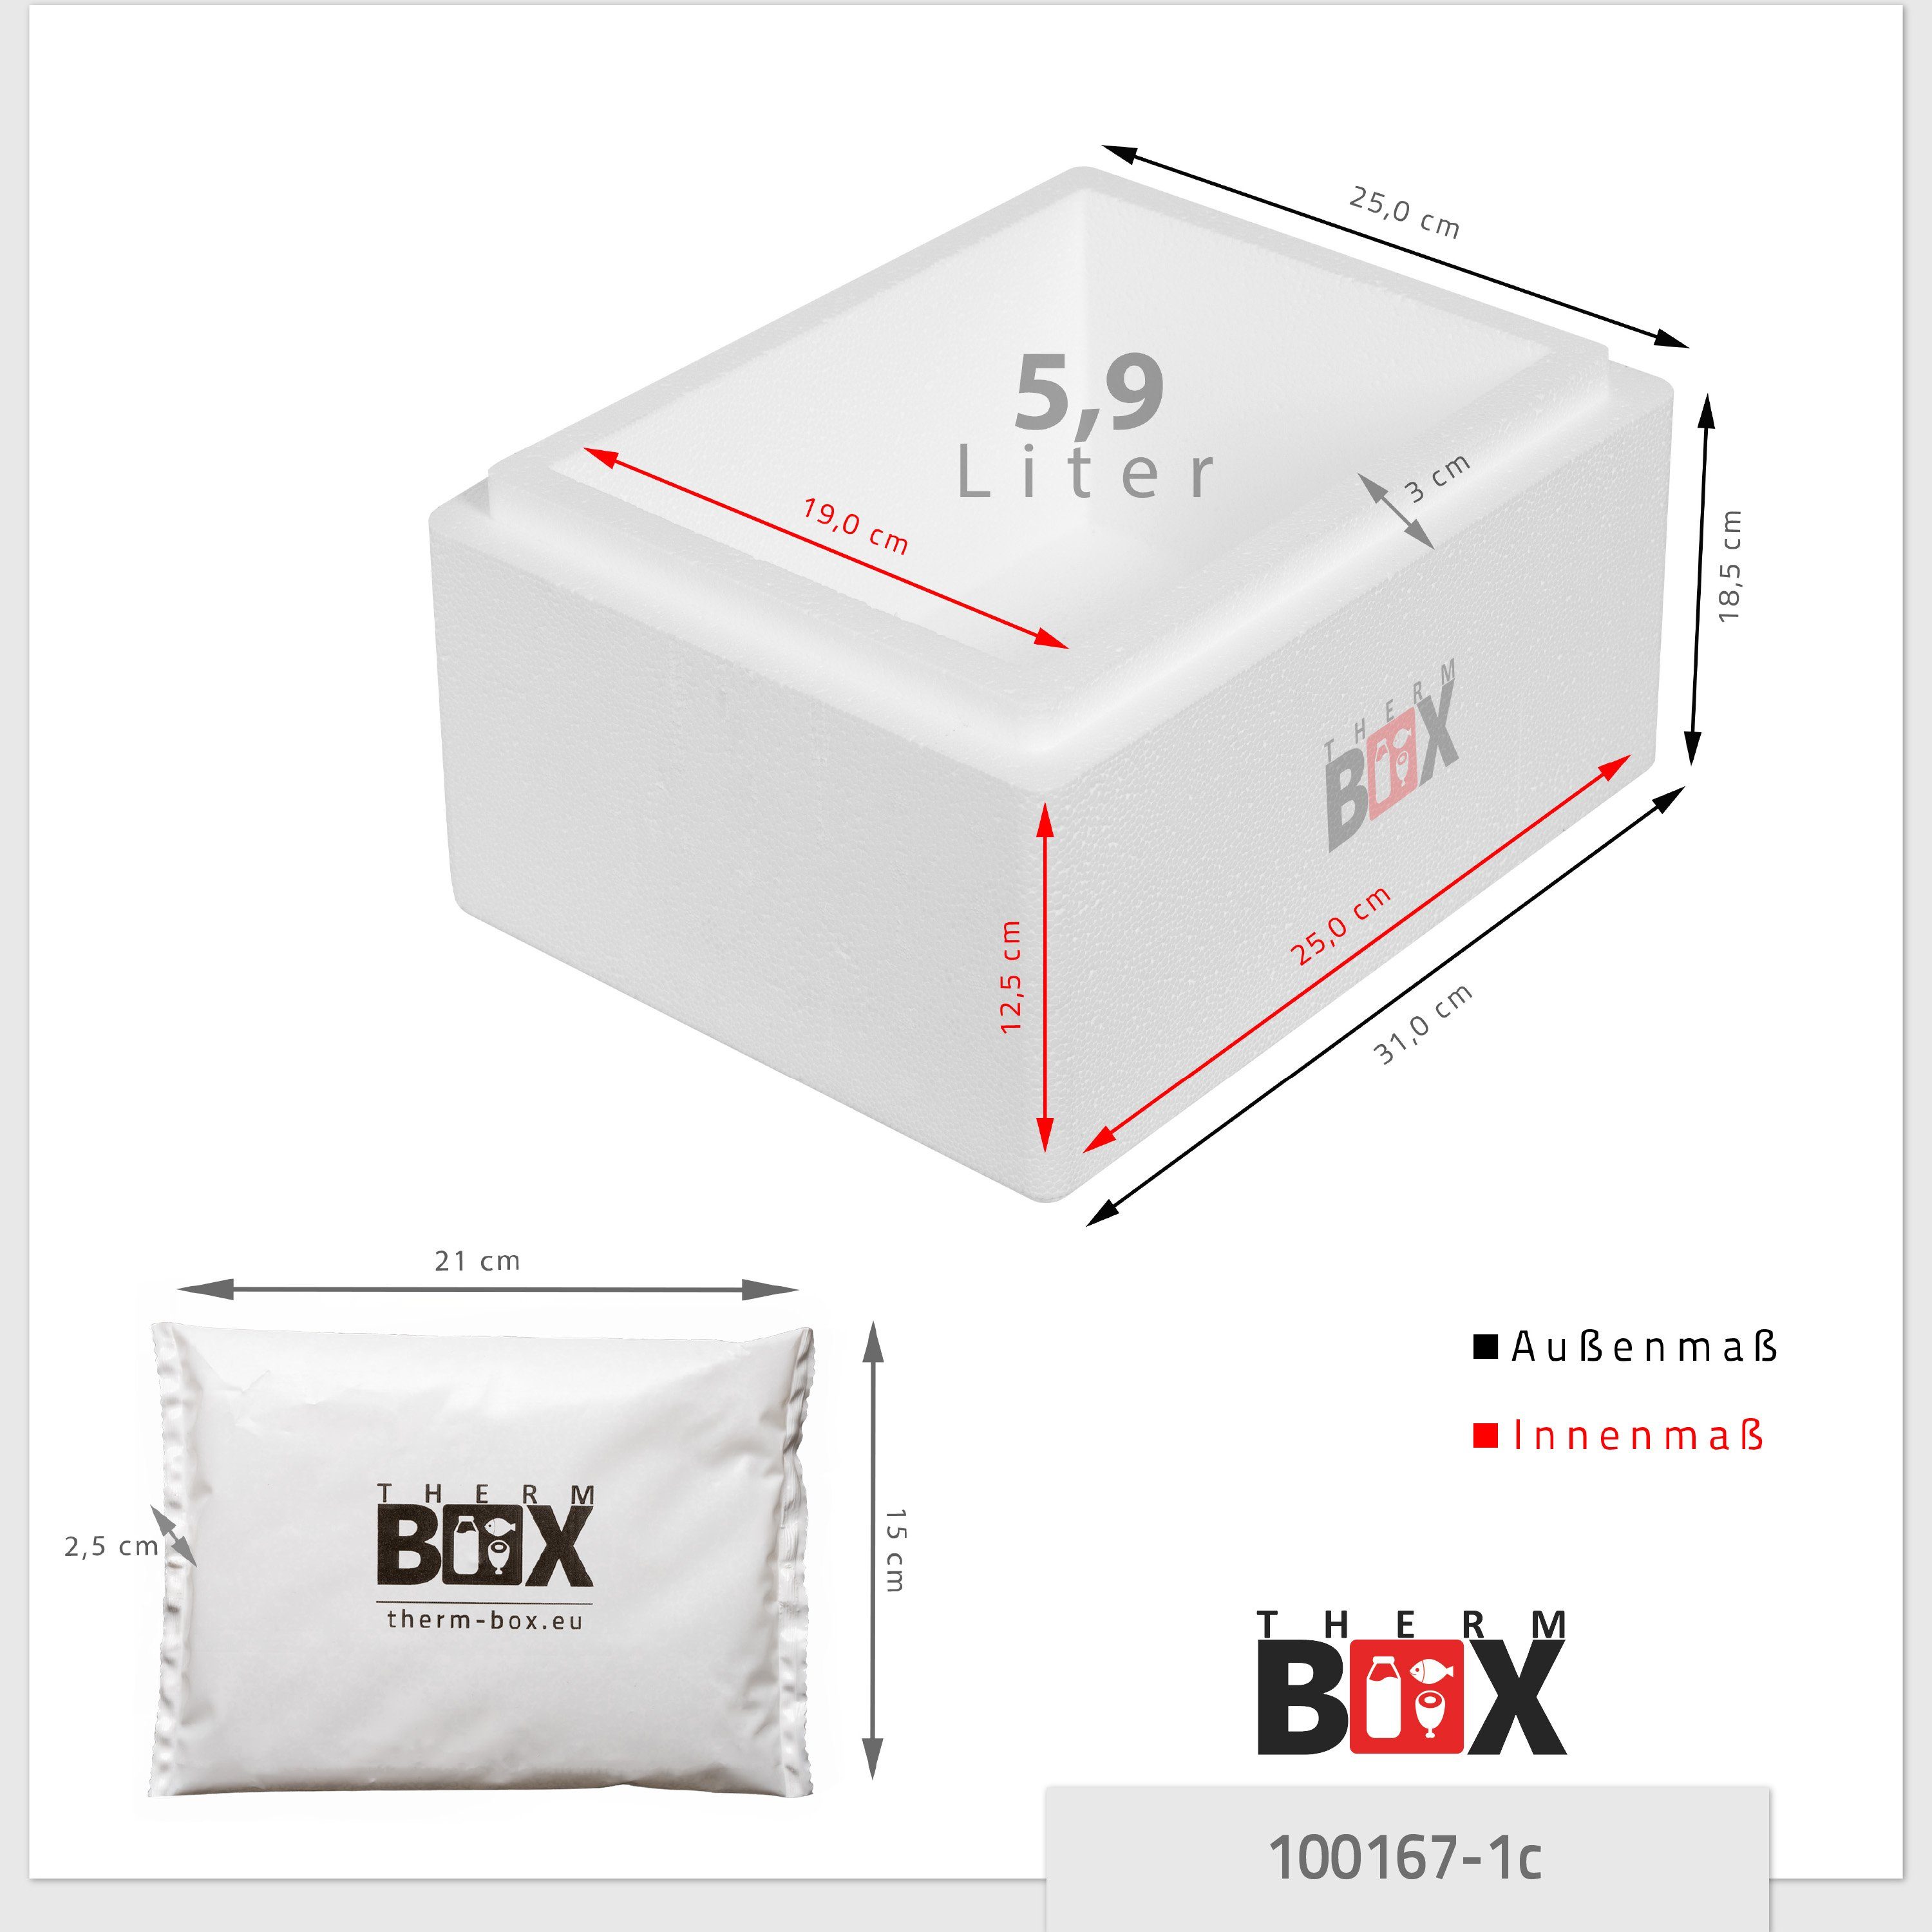 THERM-BOX Thermobehälter Styroporbox 5W mit Thermobehälter Kühlkissen), mit 1 25x19x12cm Thermbox (0-tlg., Kühlbox Innen: Transportbox Kühlkissen, Styropor-Verdichtet, 5,9L Kühlakku